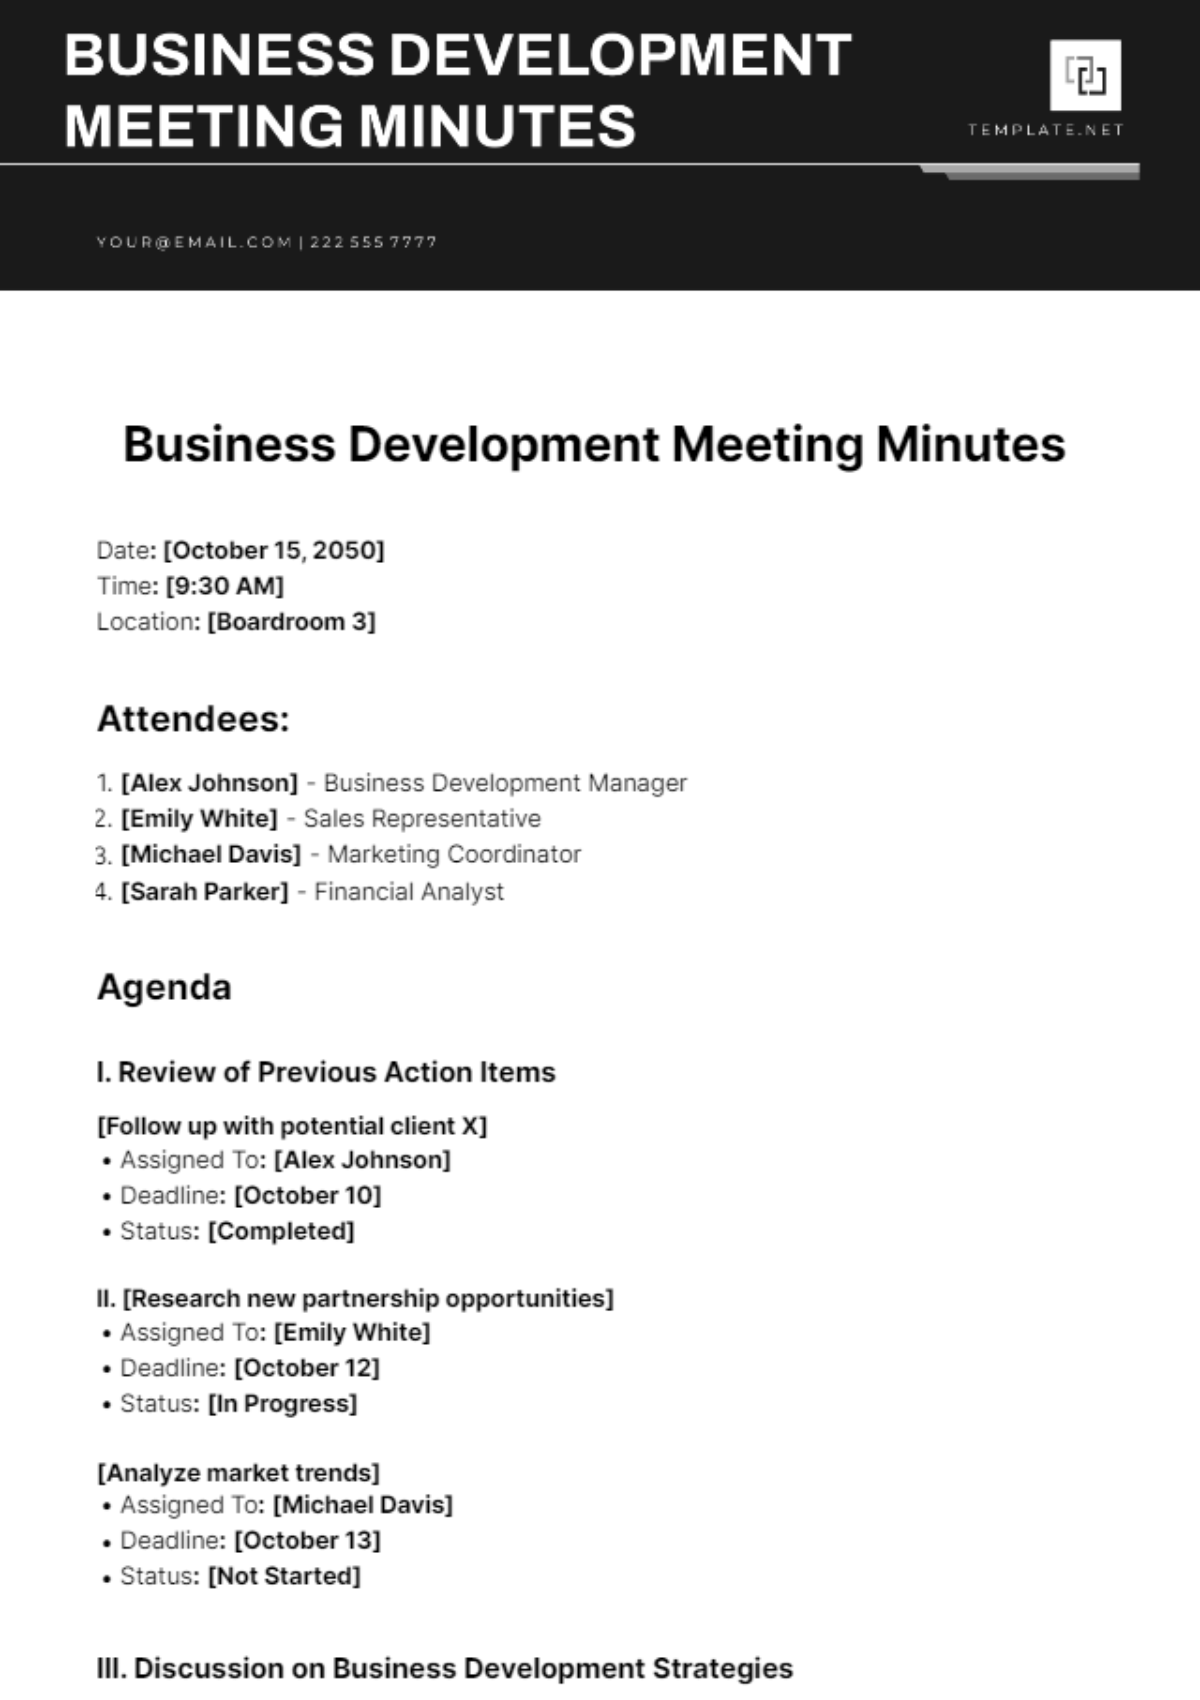 Business Development Meeting Minutes Template